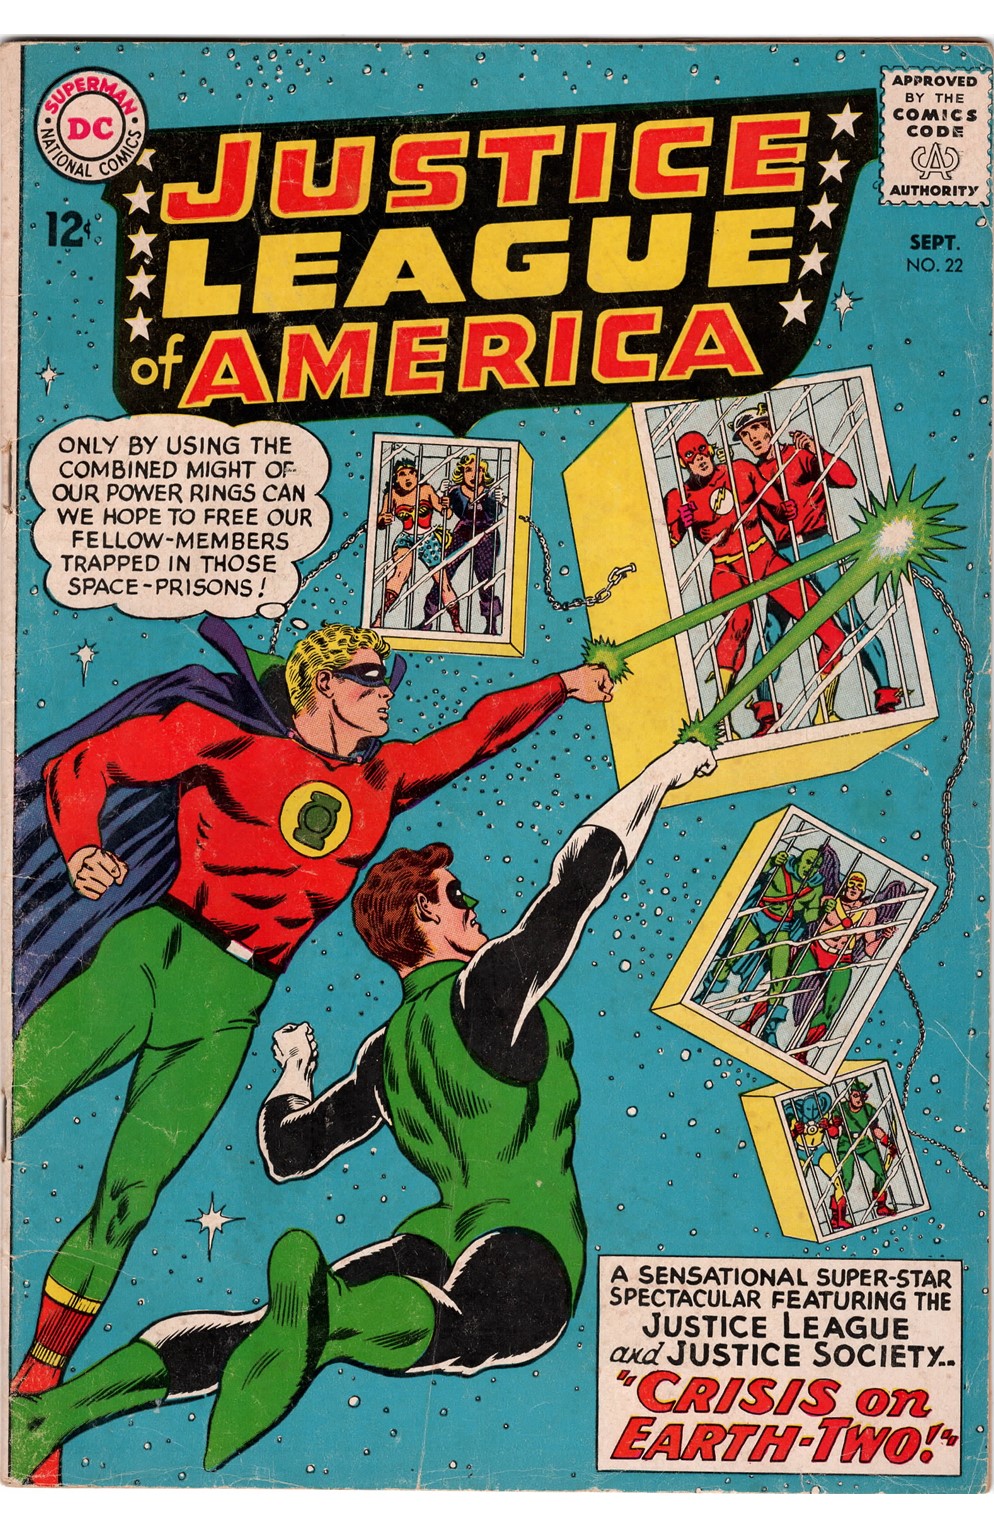 Justice League of America #022